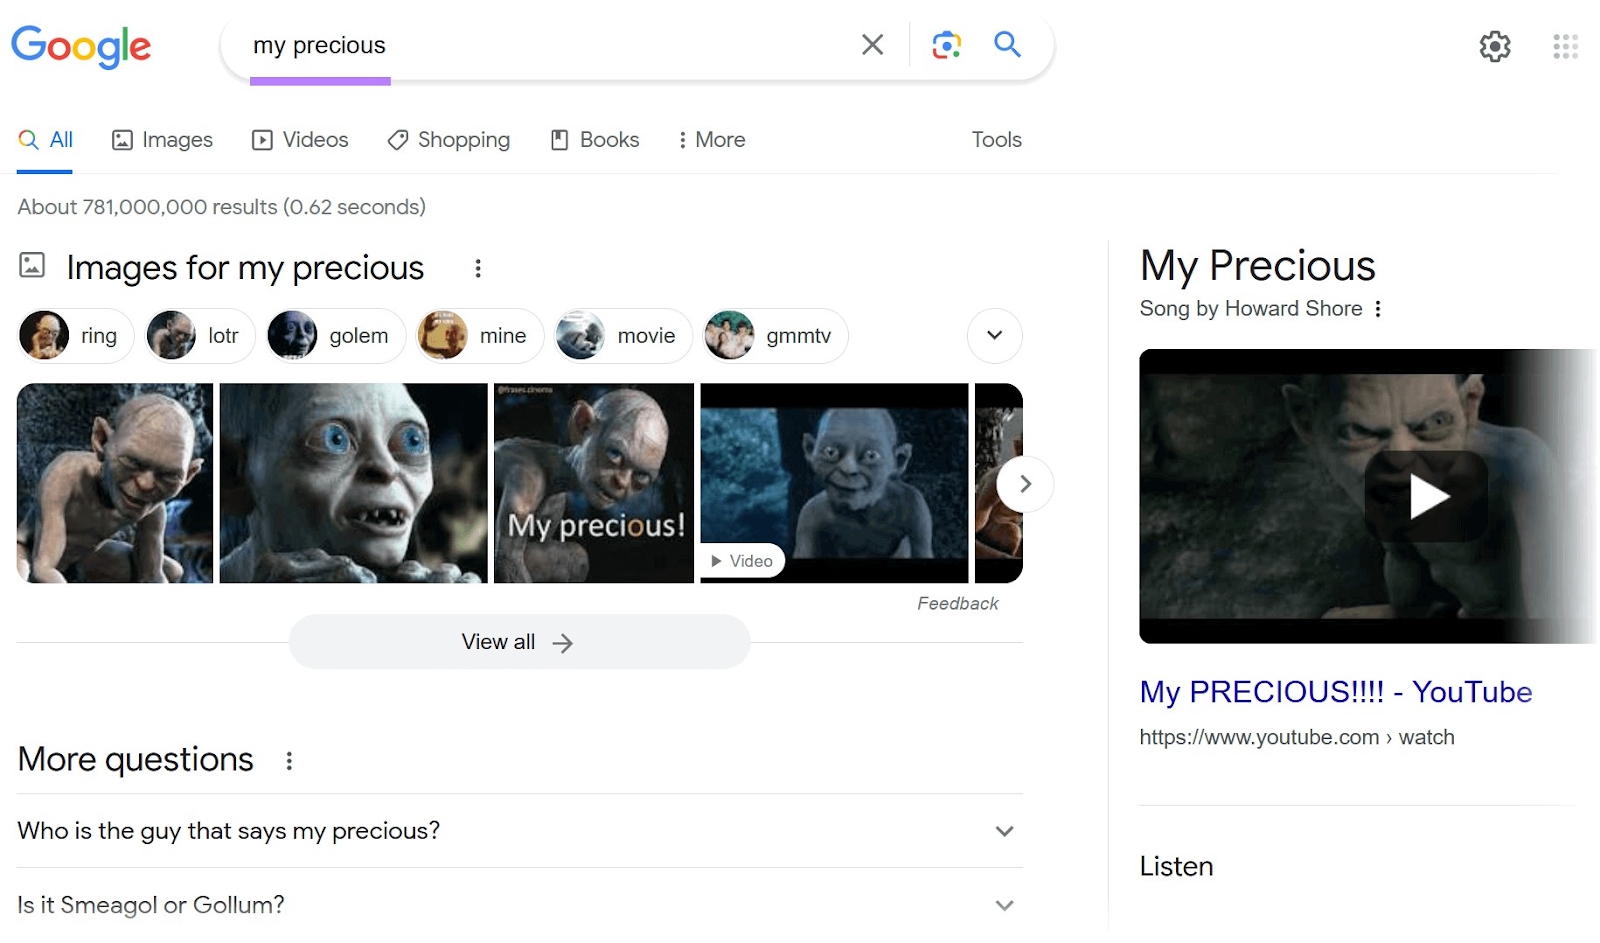 Google search for "my precious"